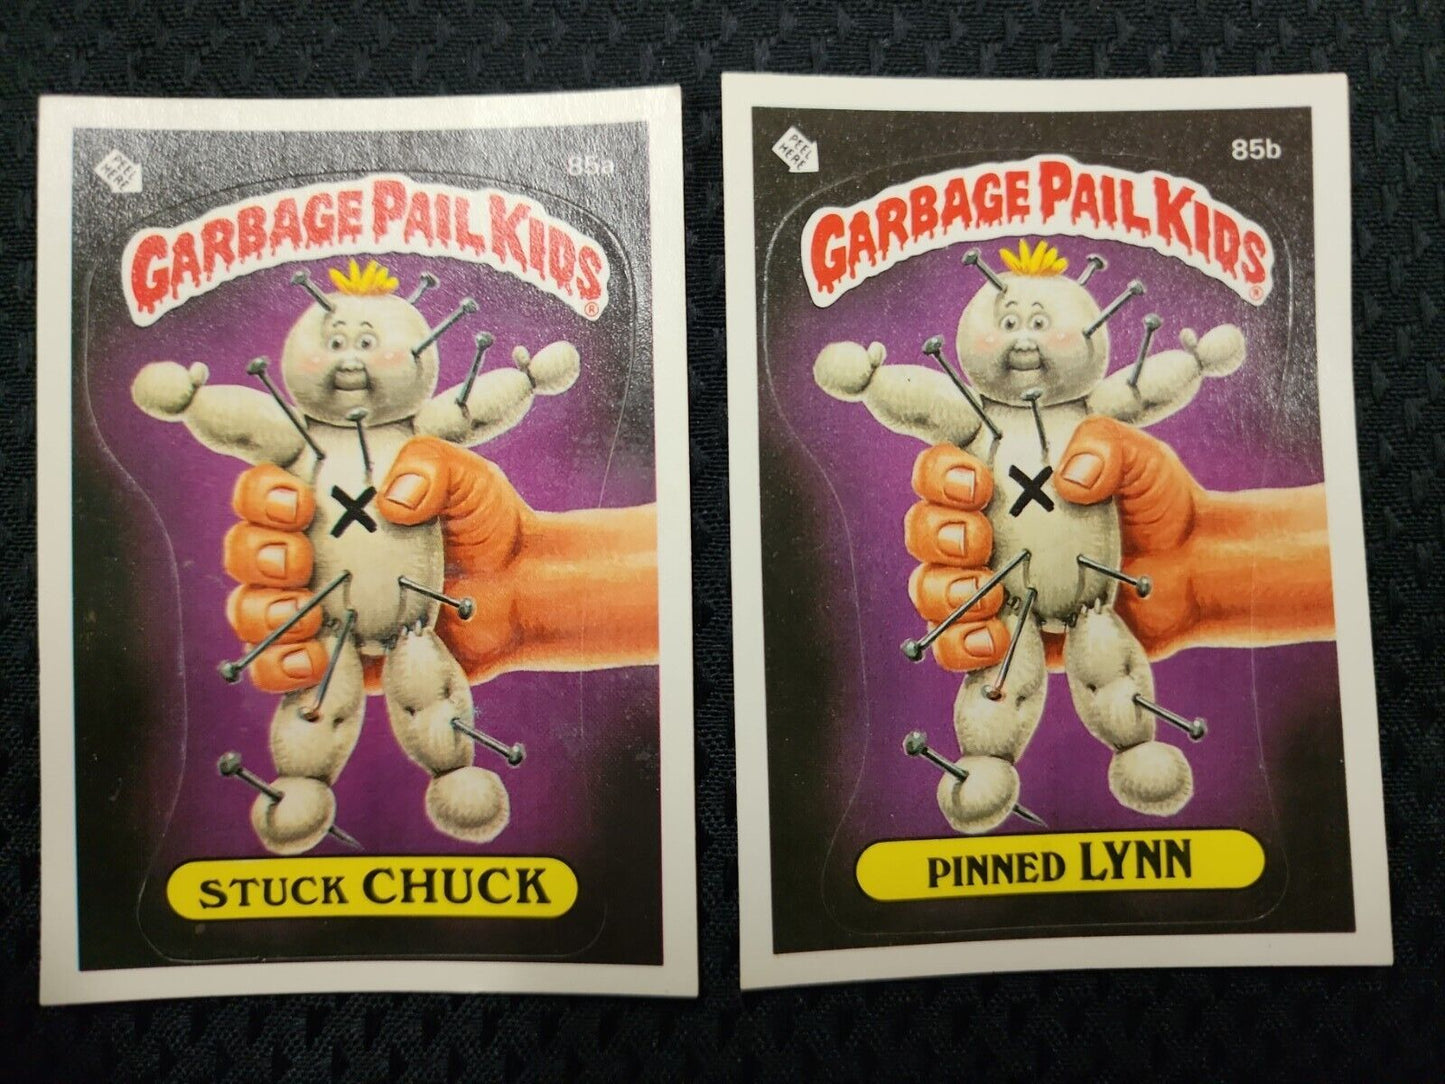 1986 Topps Garbage Pail Kids Series 3 STUCK CHUCK 85a & PINNED LYNN 85b GPK